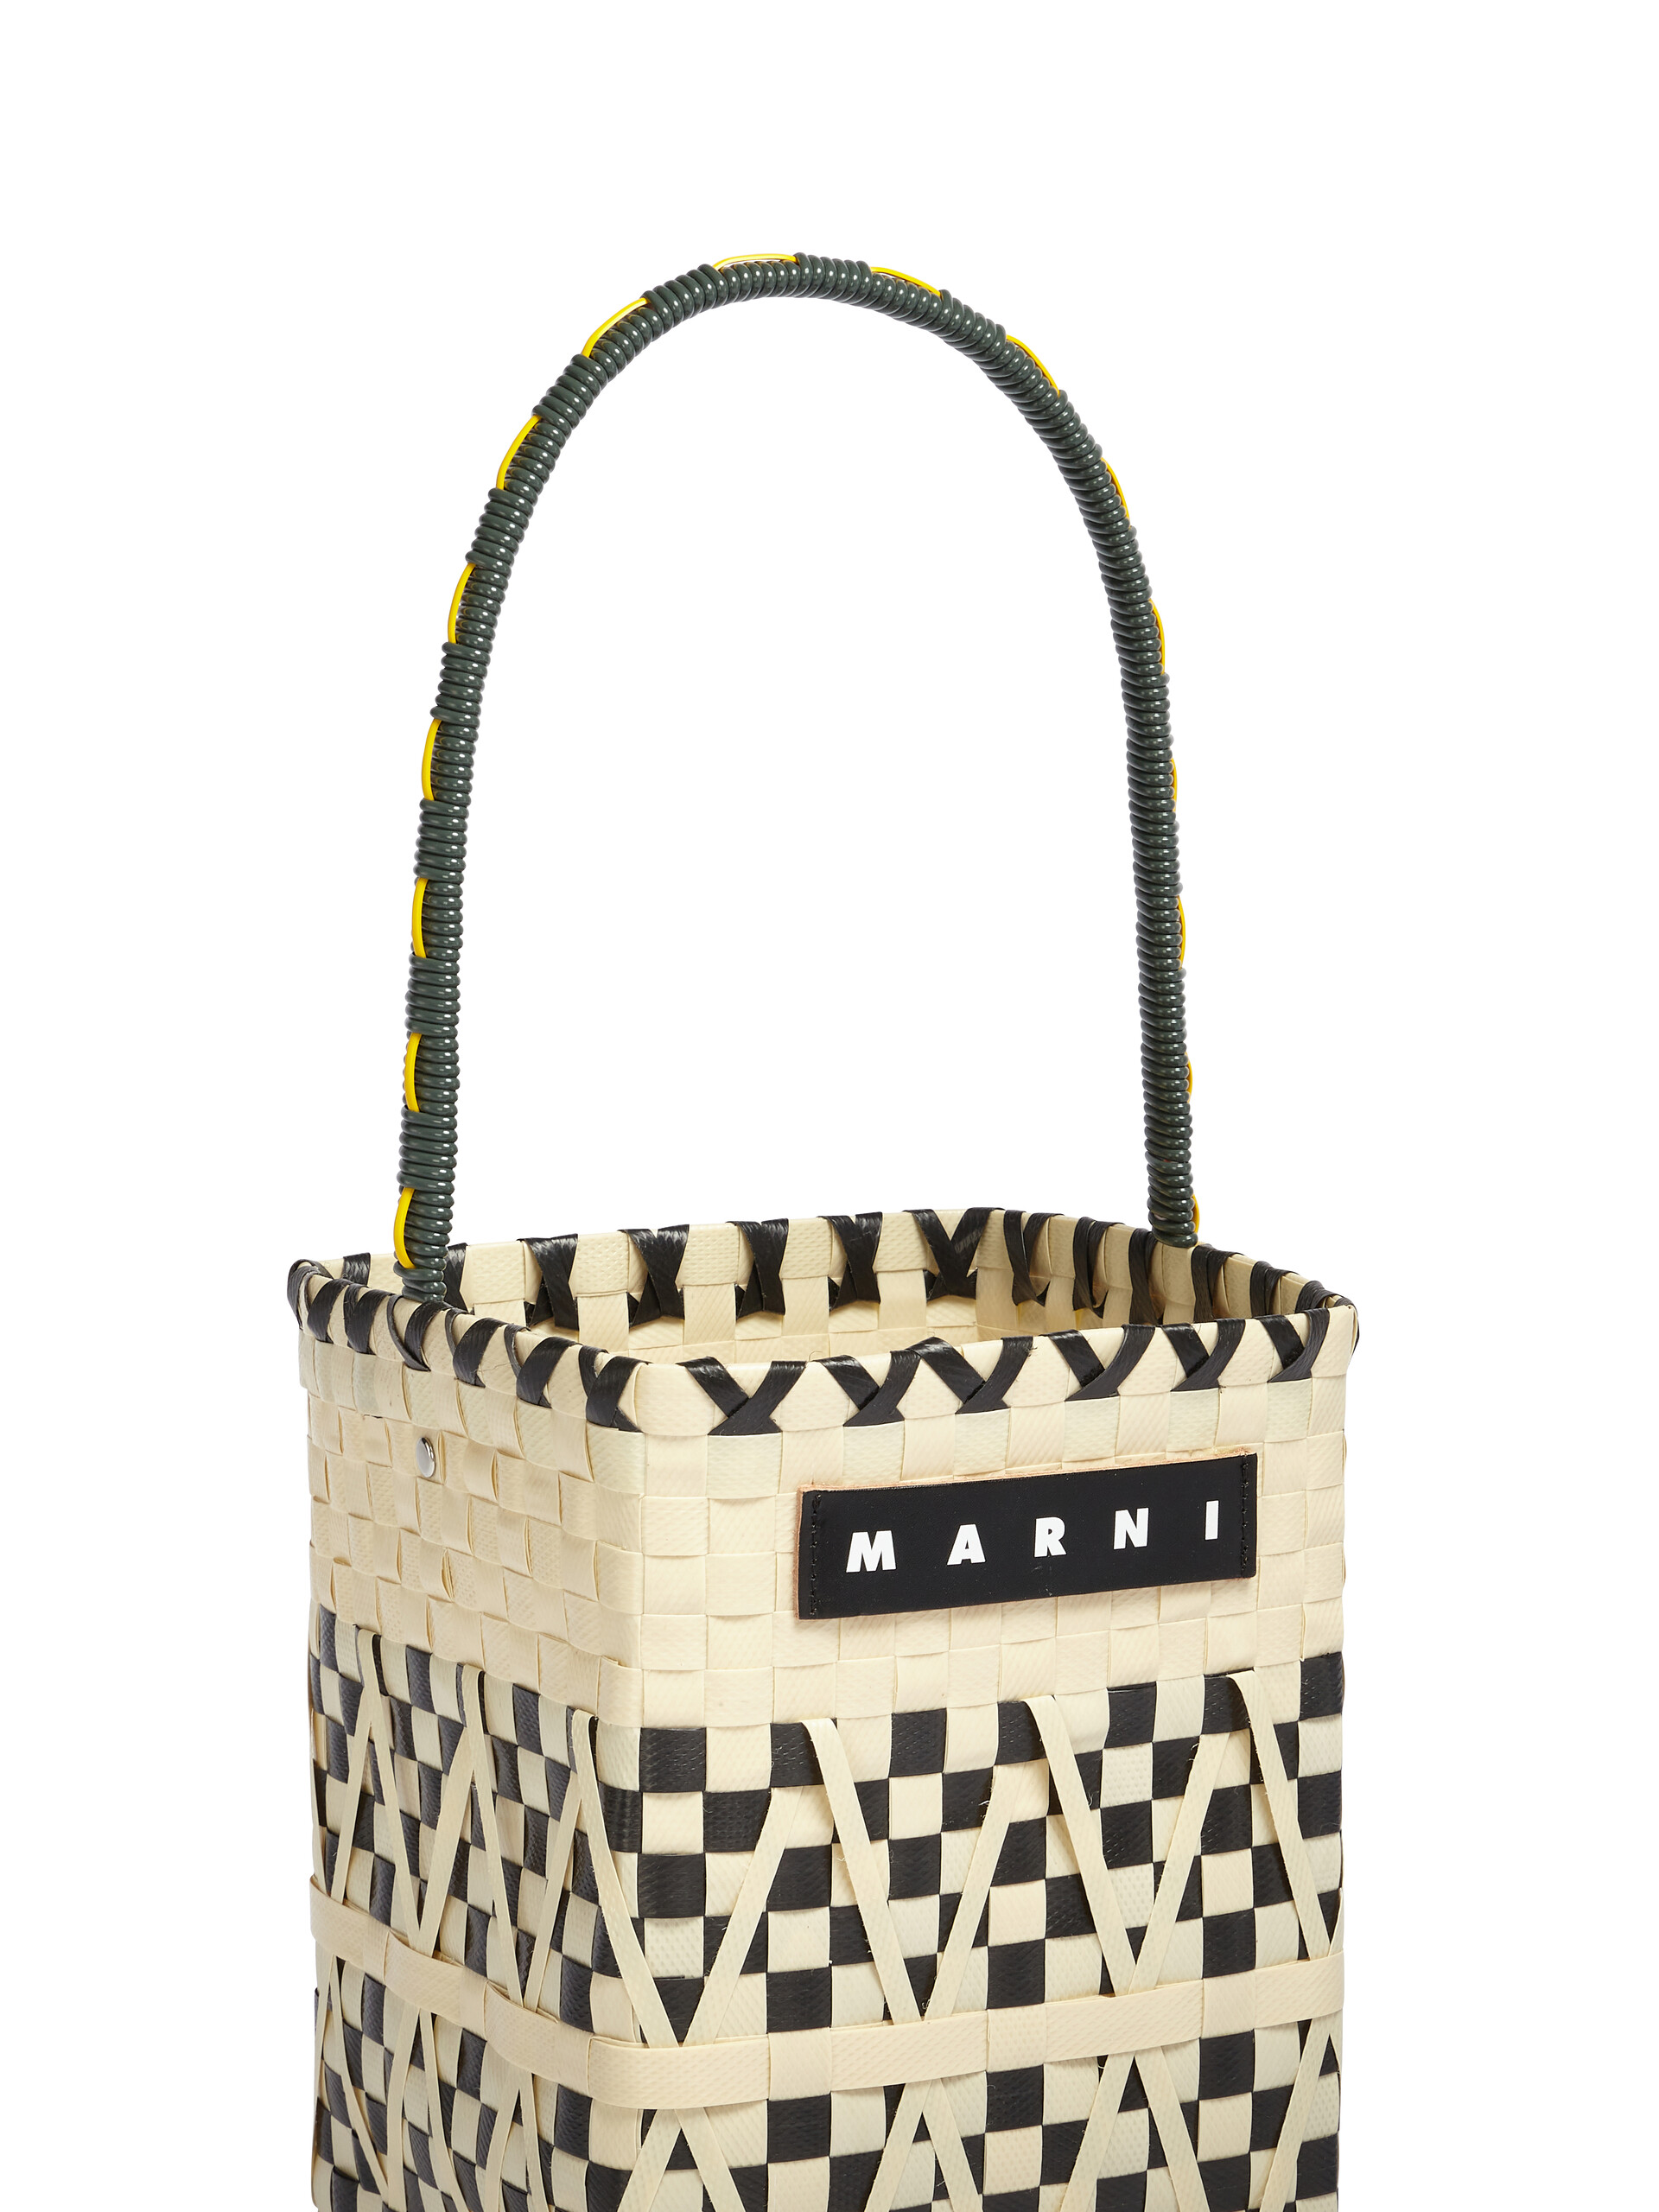 MARNI MARKET black and white bucket bag - Bags - Image 4